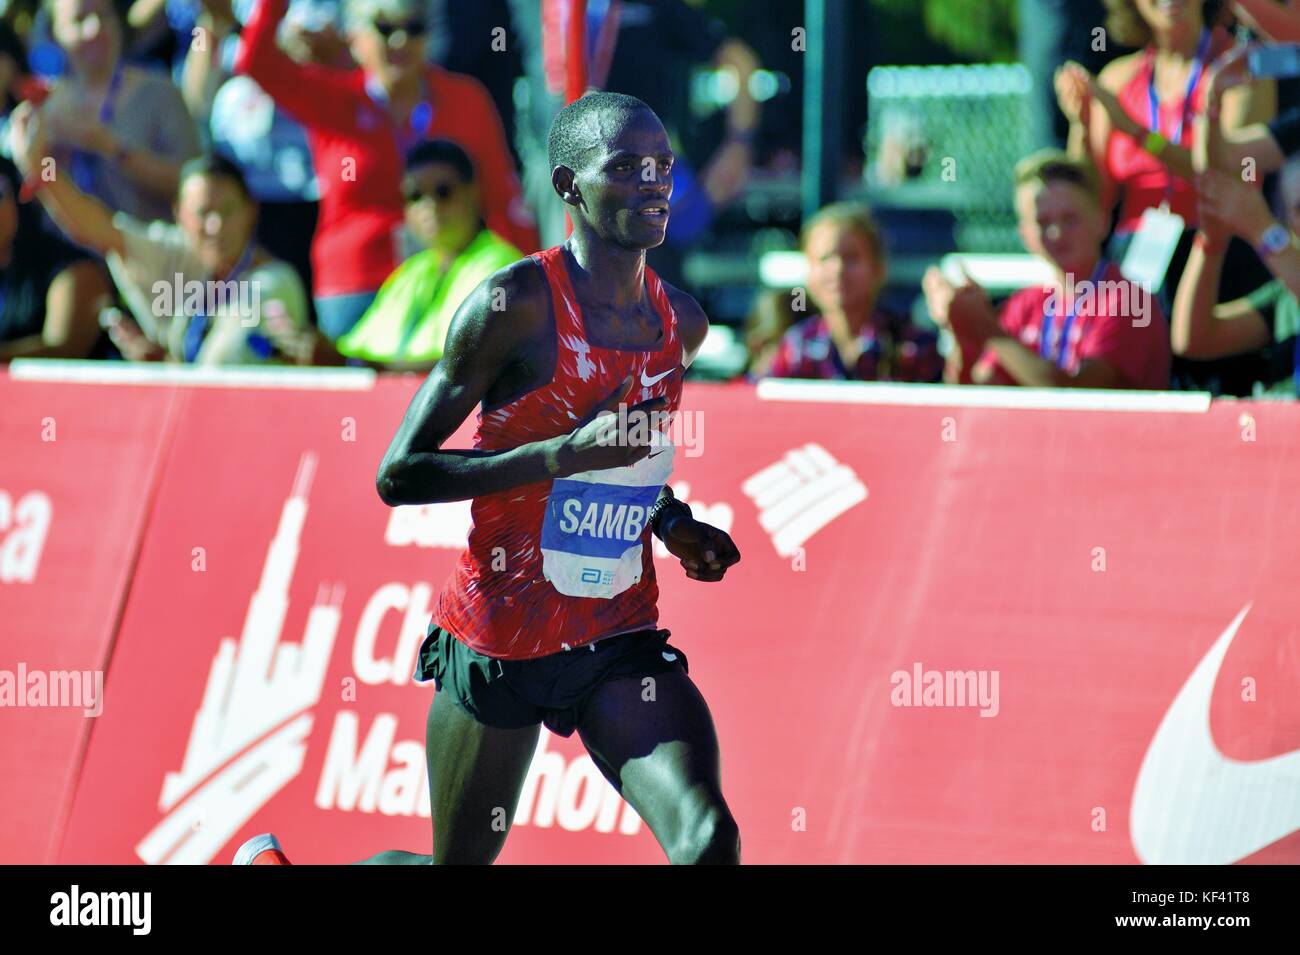 Elite runner Stephen Sambu of Kenya crossing the finish line at the 2017 Chicago Marathon. Chicago, Illinois, USA. Stock Photo